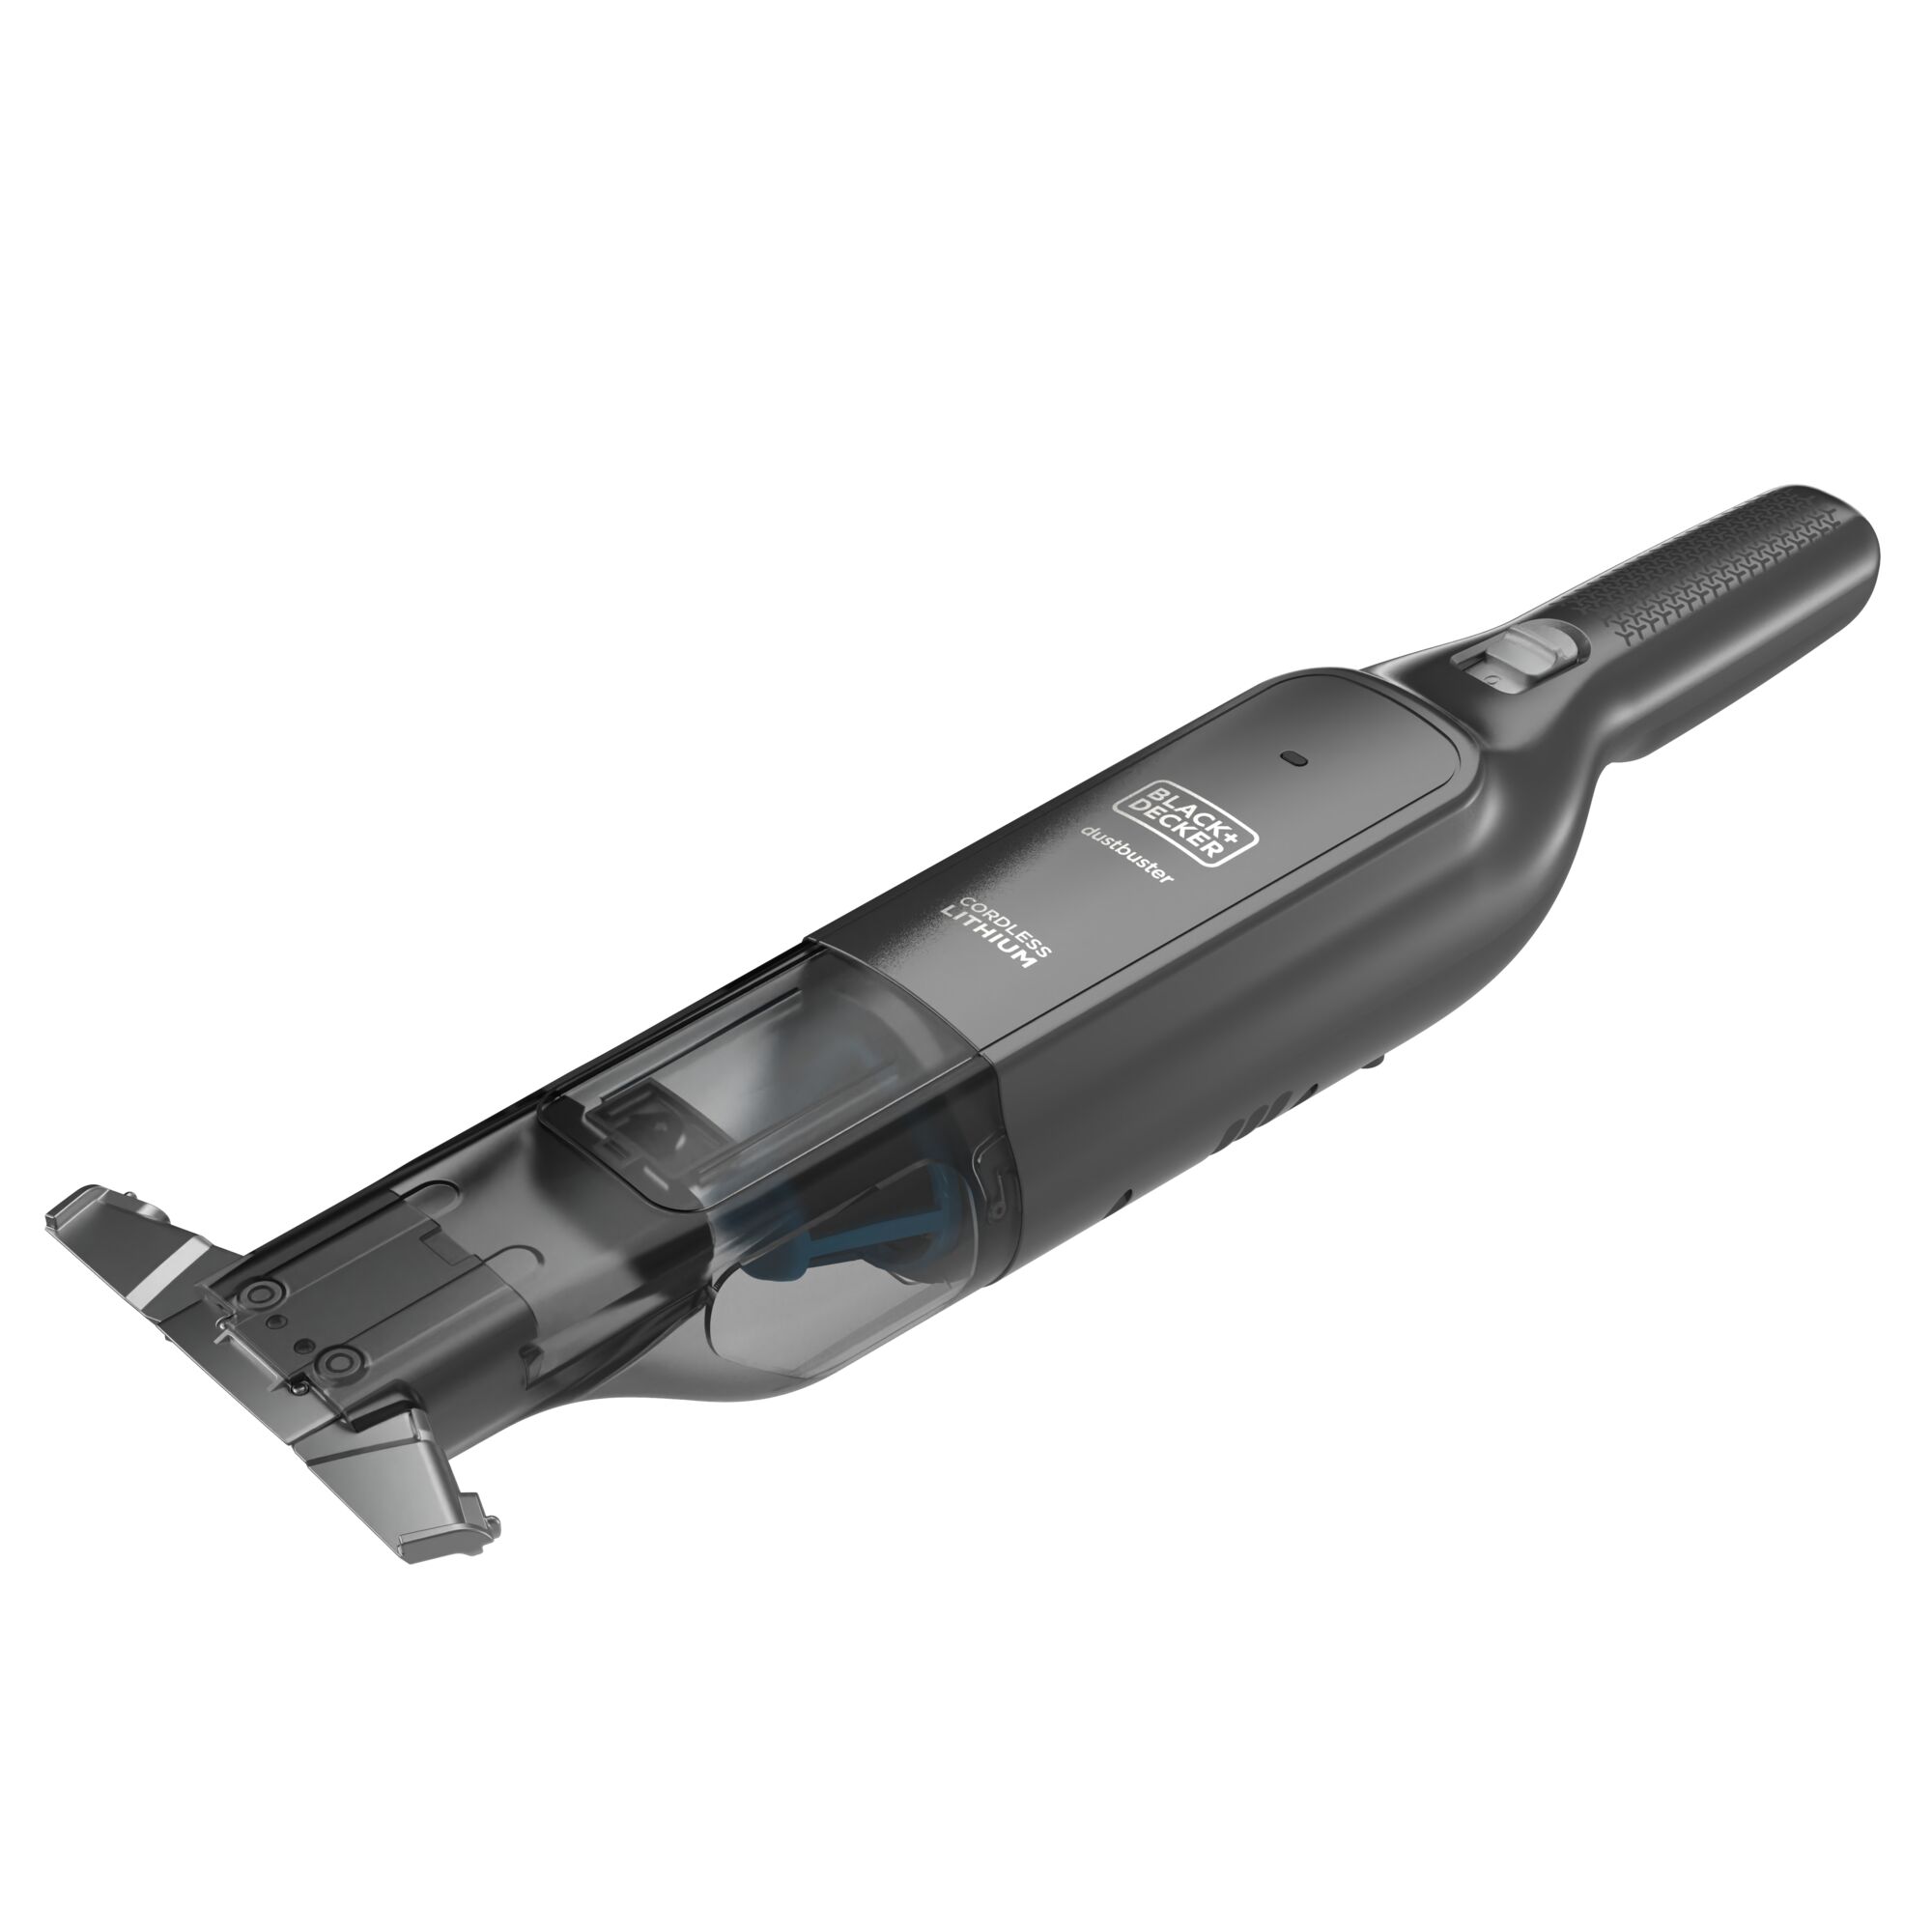 Profile of dustbuster 12 volt max advancedclean cordless hand vacuum.